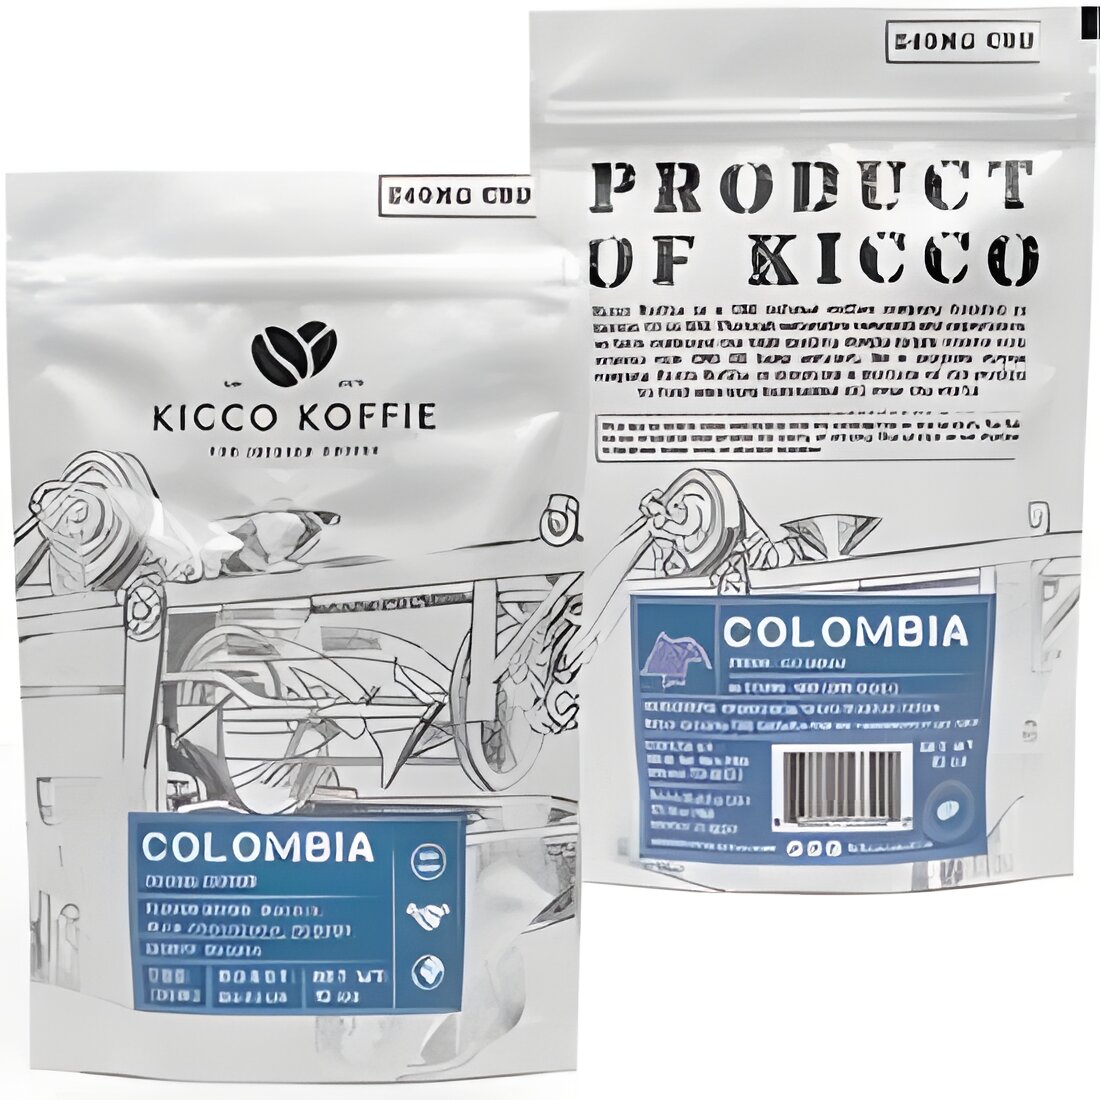 Free Kicco Koffie CBD Infused Coffee